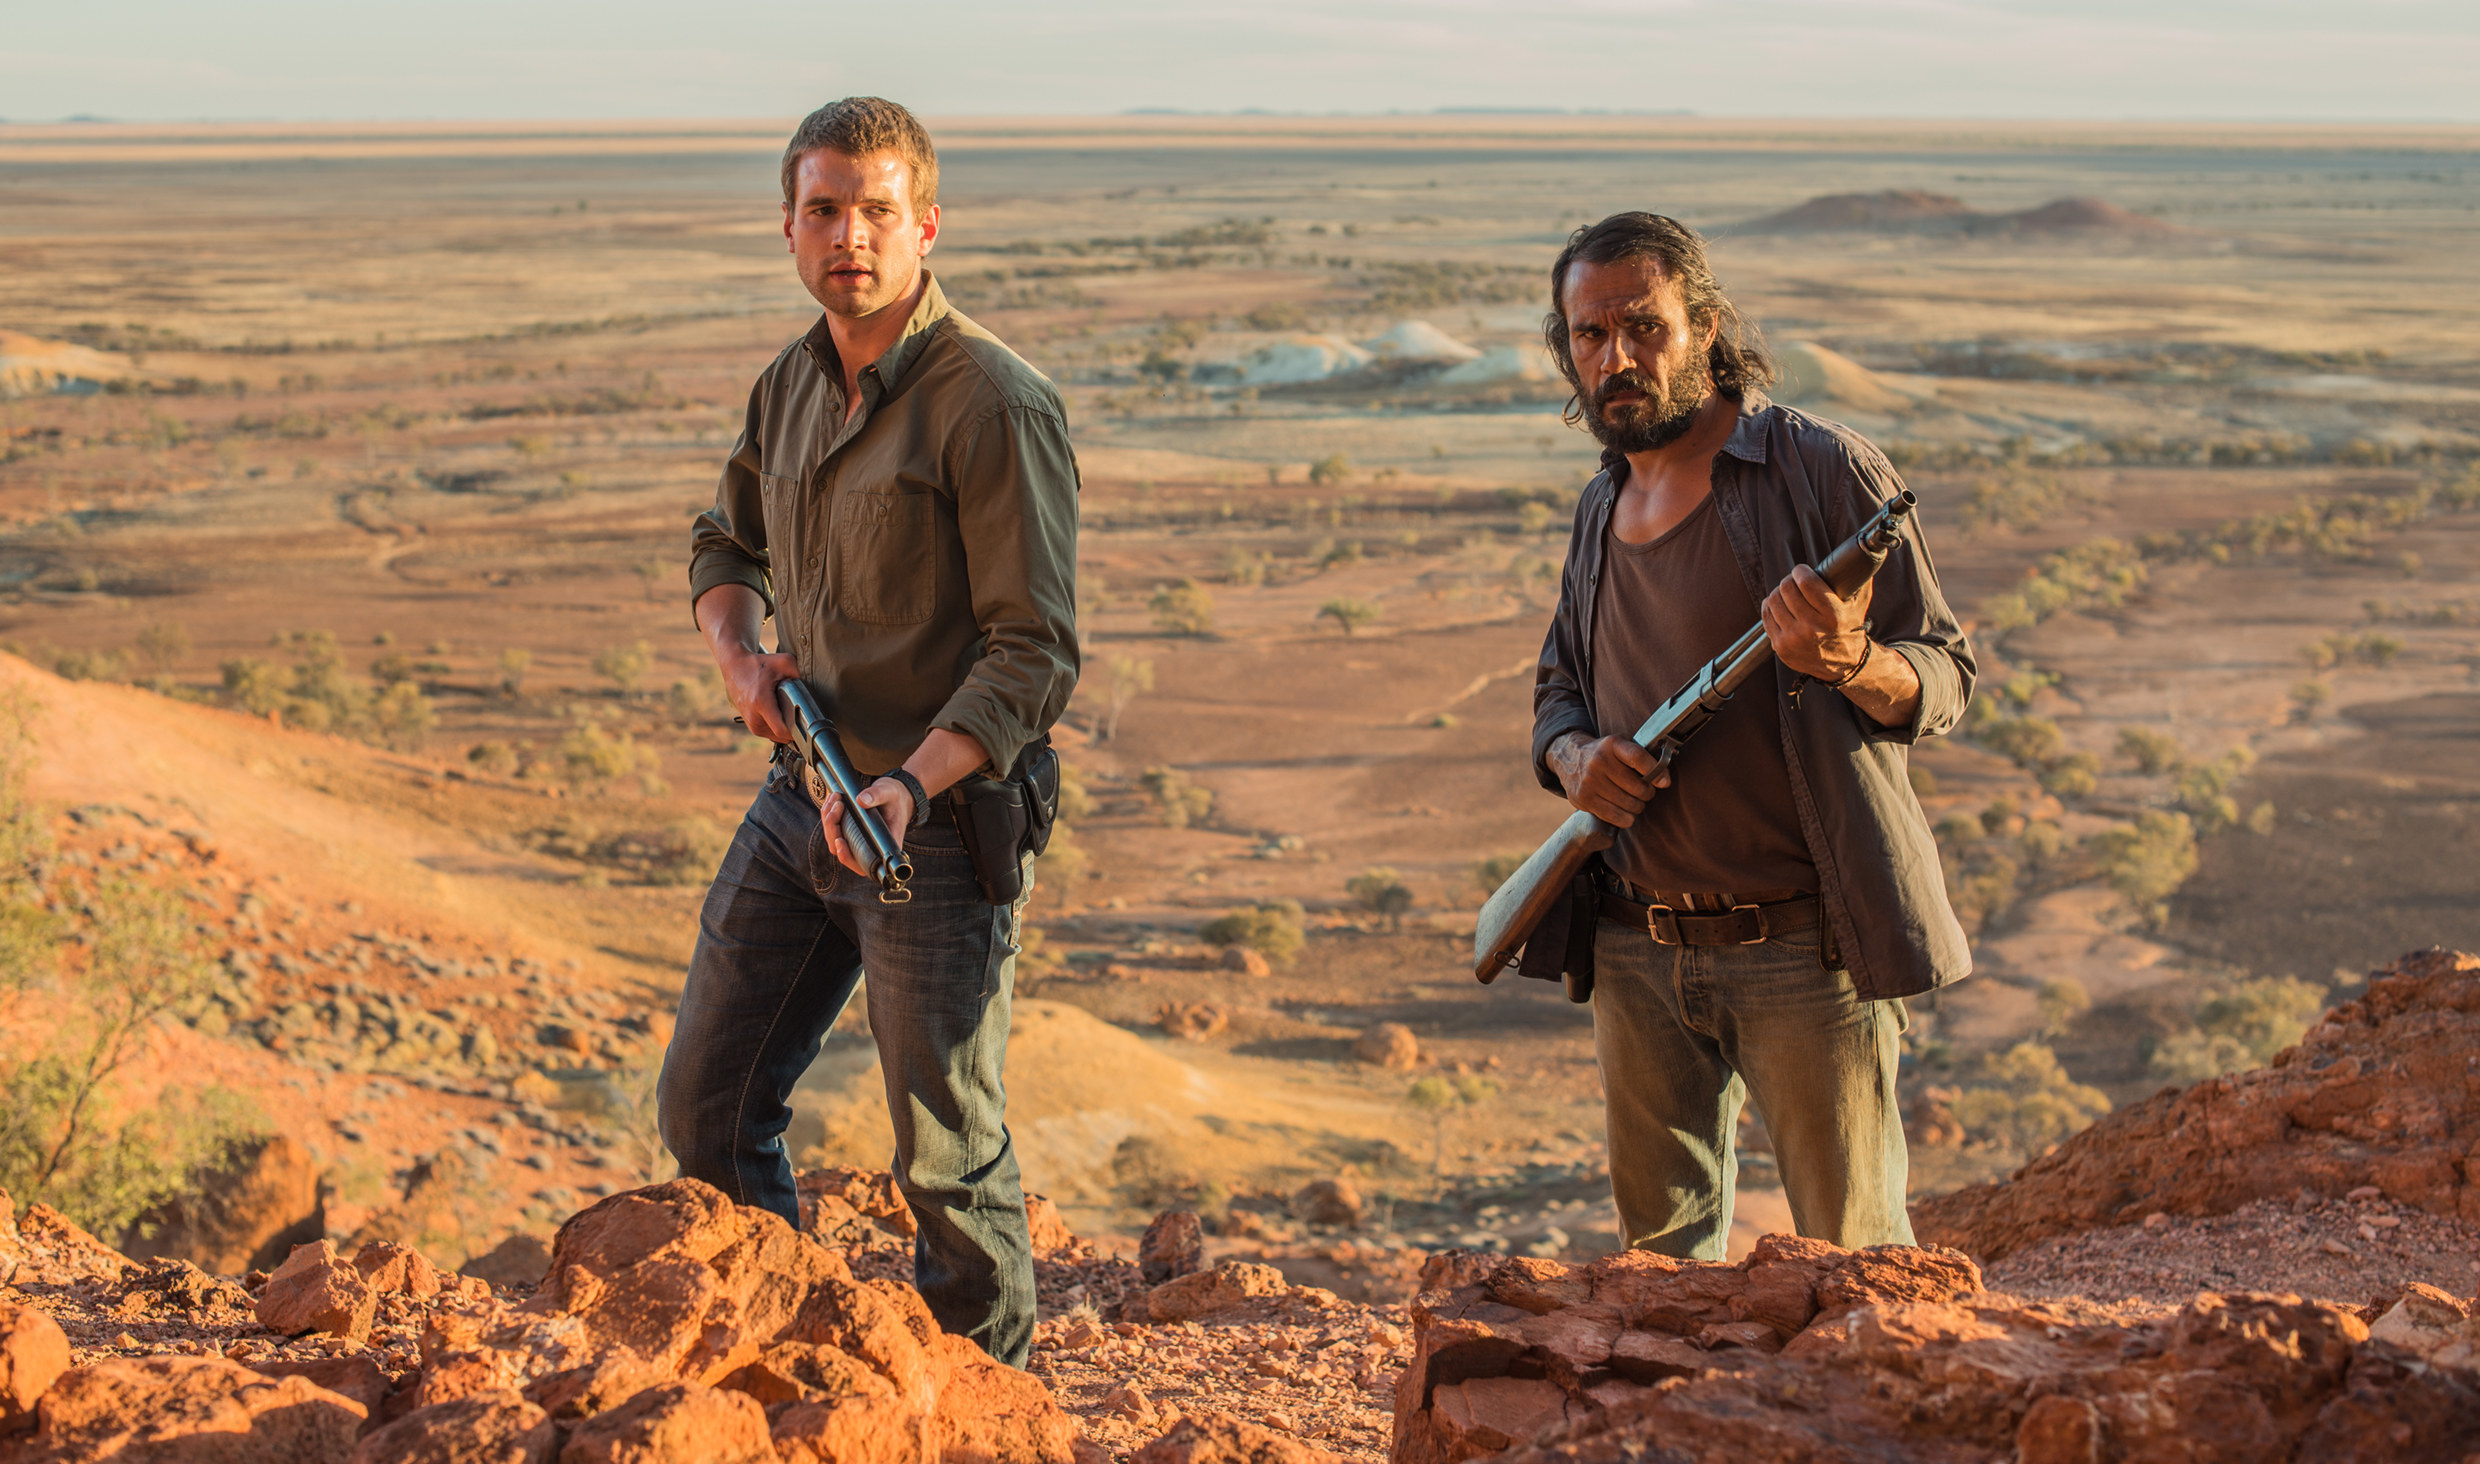 Two men in the Australian outback holding guns